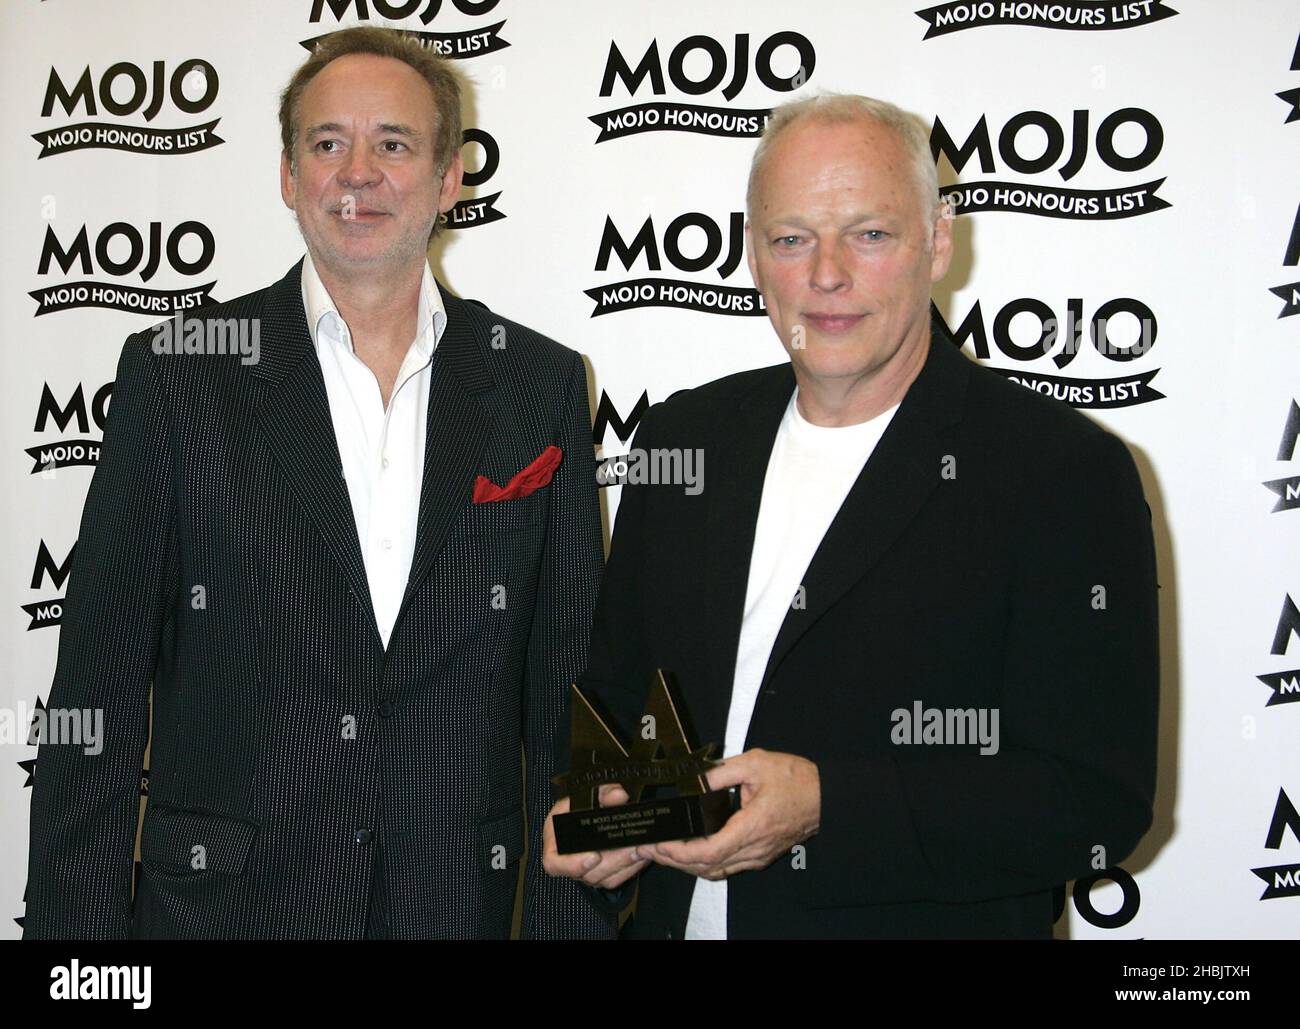 Dave Gilmour recibe el premio Mojo Lifetime Achievement Award y posará con Phil Manzera. Foto de stock